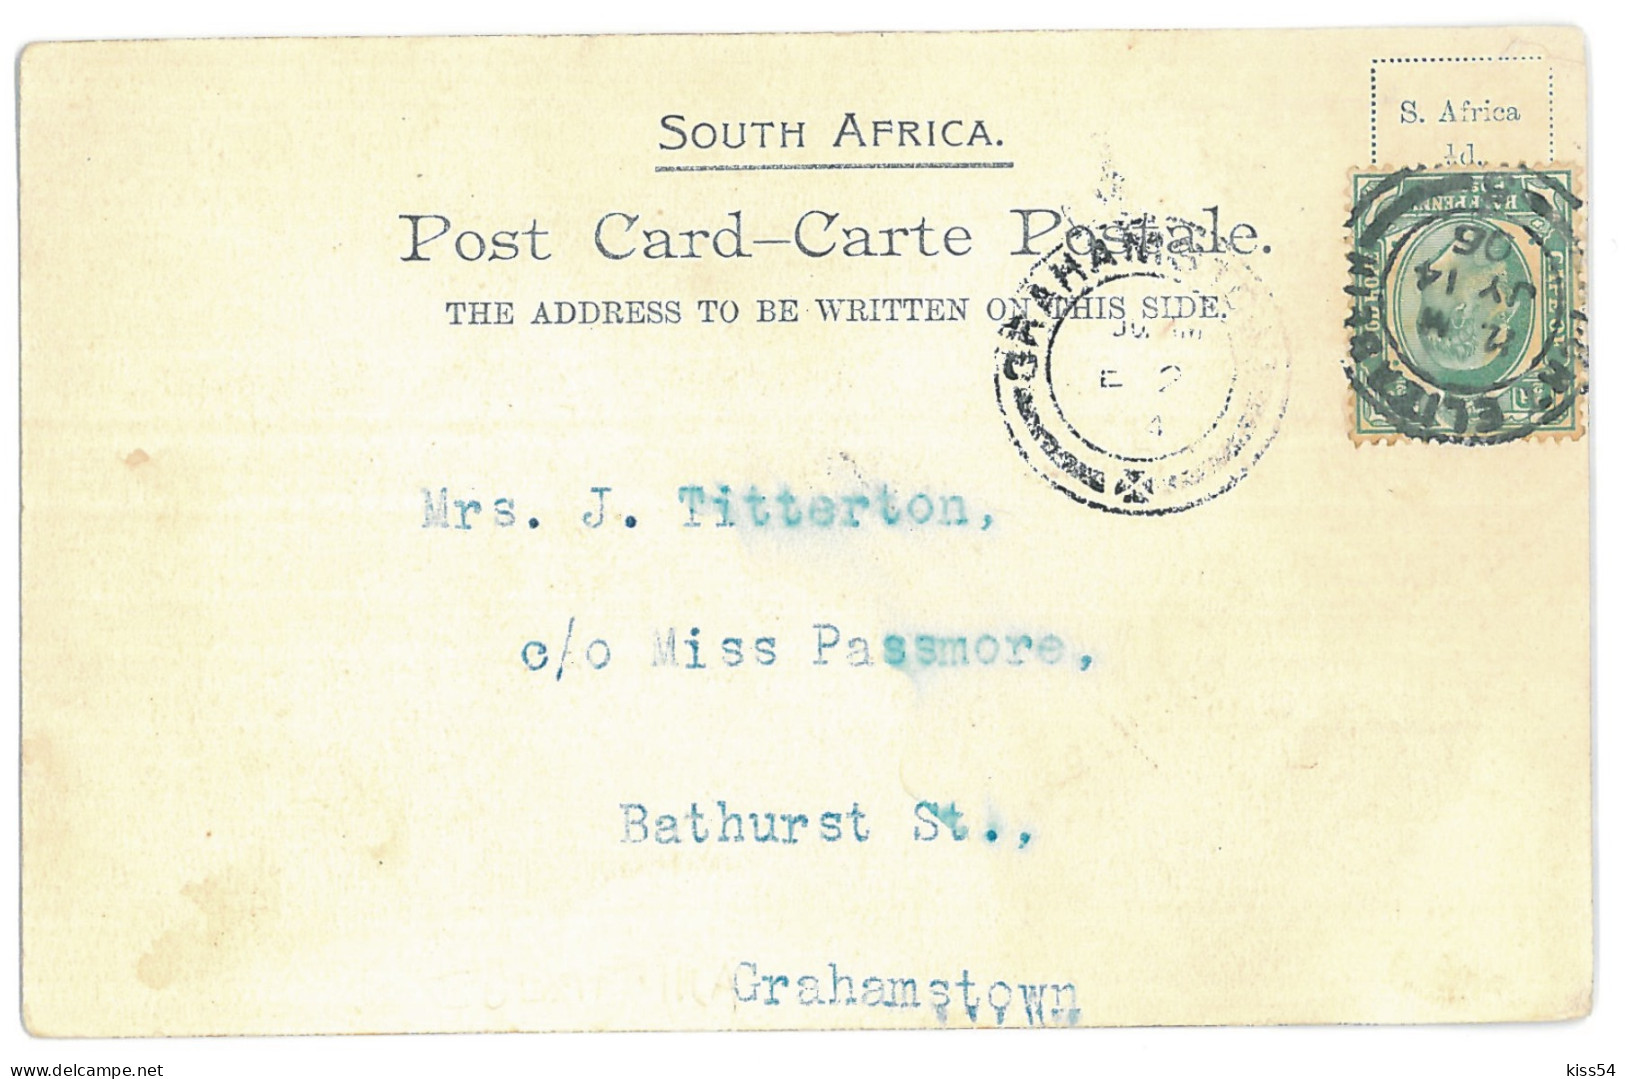 A 100 - 12078 PORT ELIZABETH, Town Hall - Old Postcard - Used - 1906 - Sudáfrica